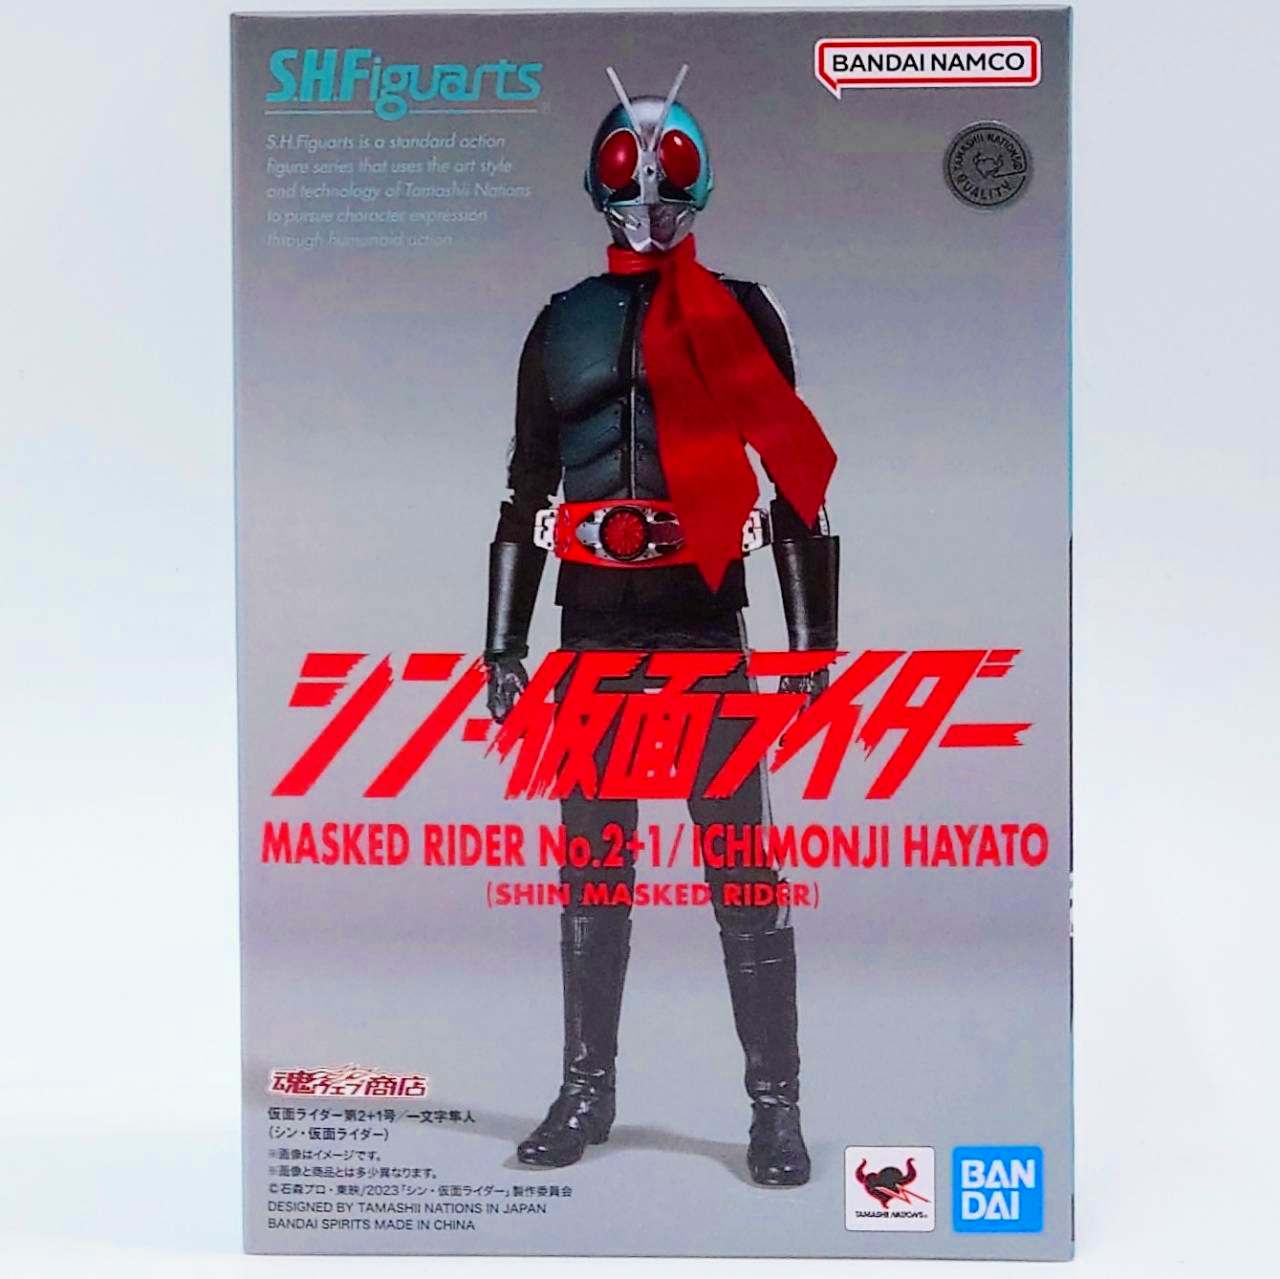 S.H.Figuarts Masked Rider No.2+1/Ichimonji Hayato